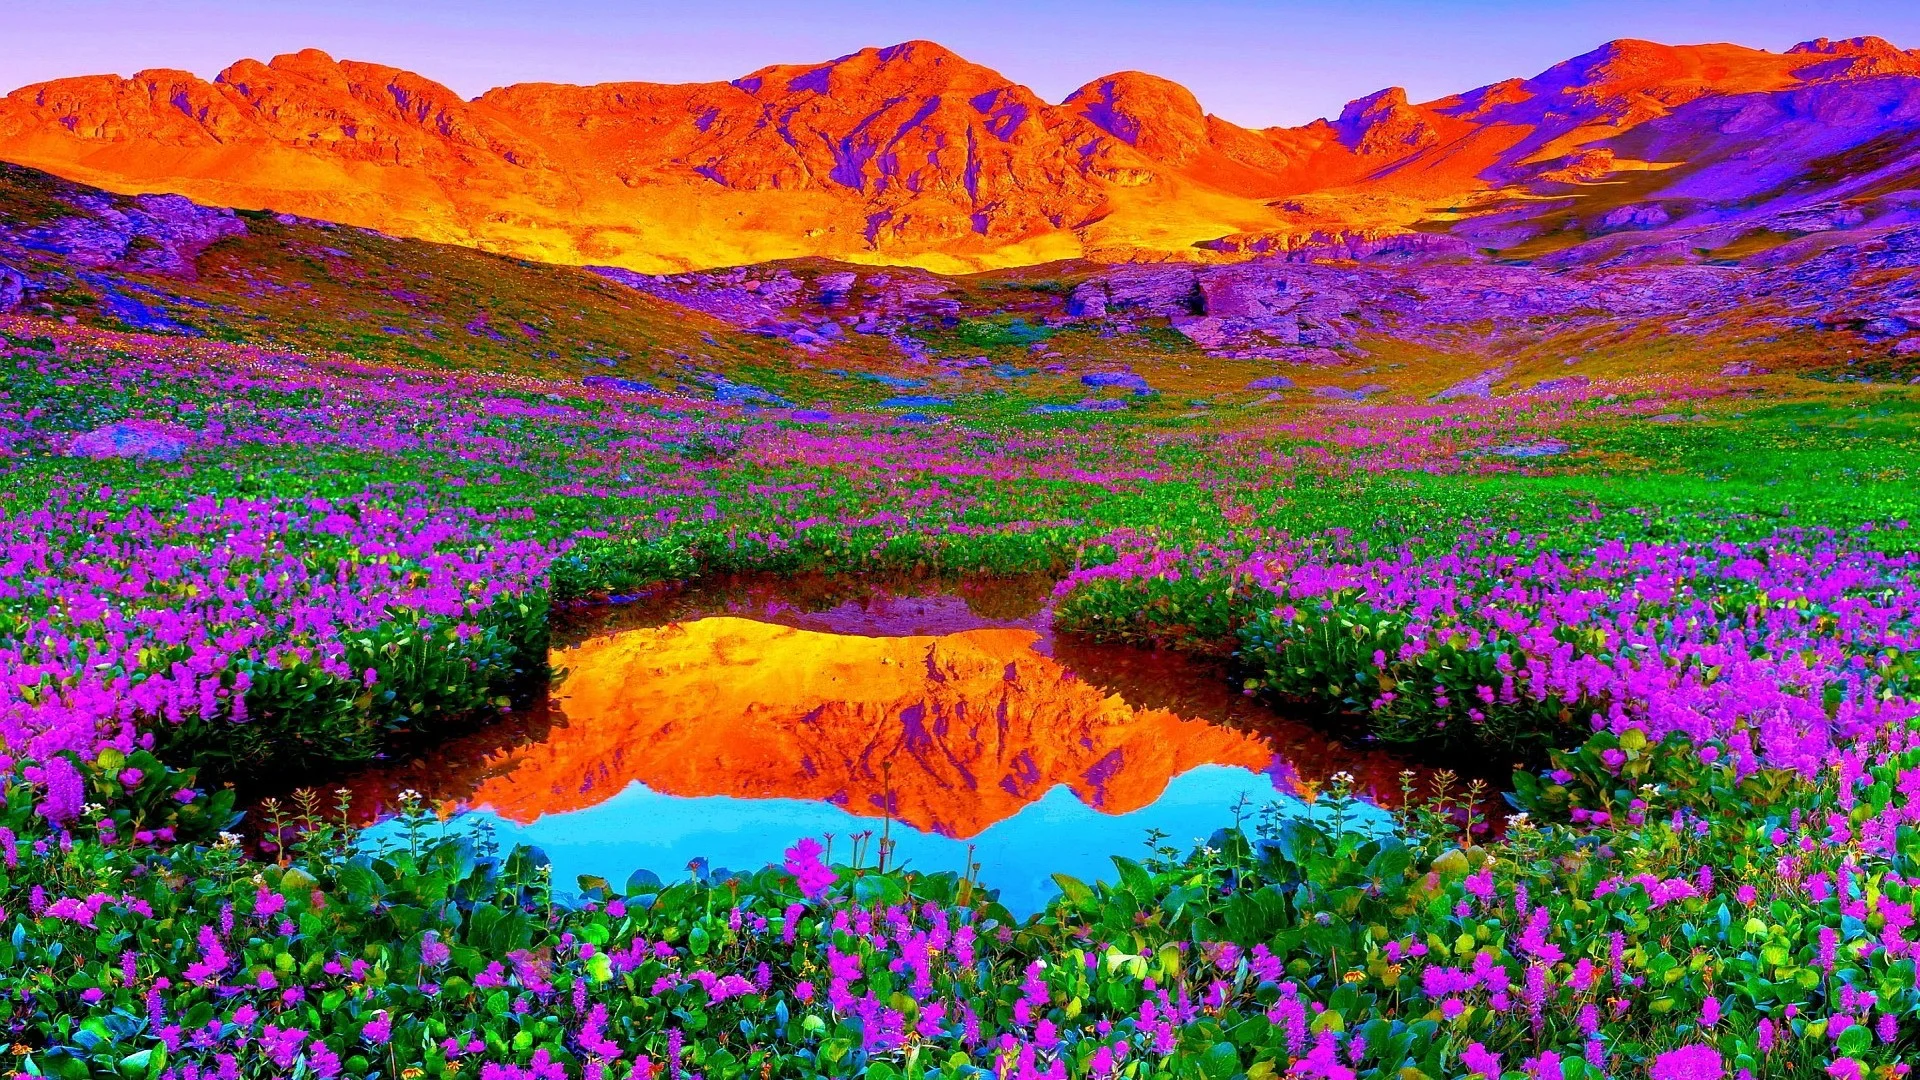 Brilliant Colors Of Nature Hd Desktop Background wallpapers HD .